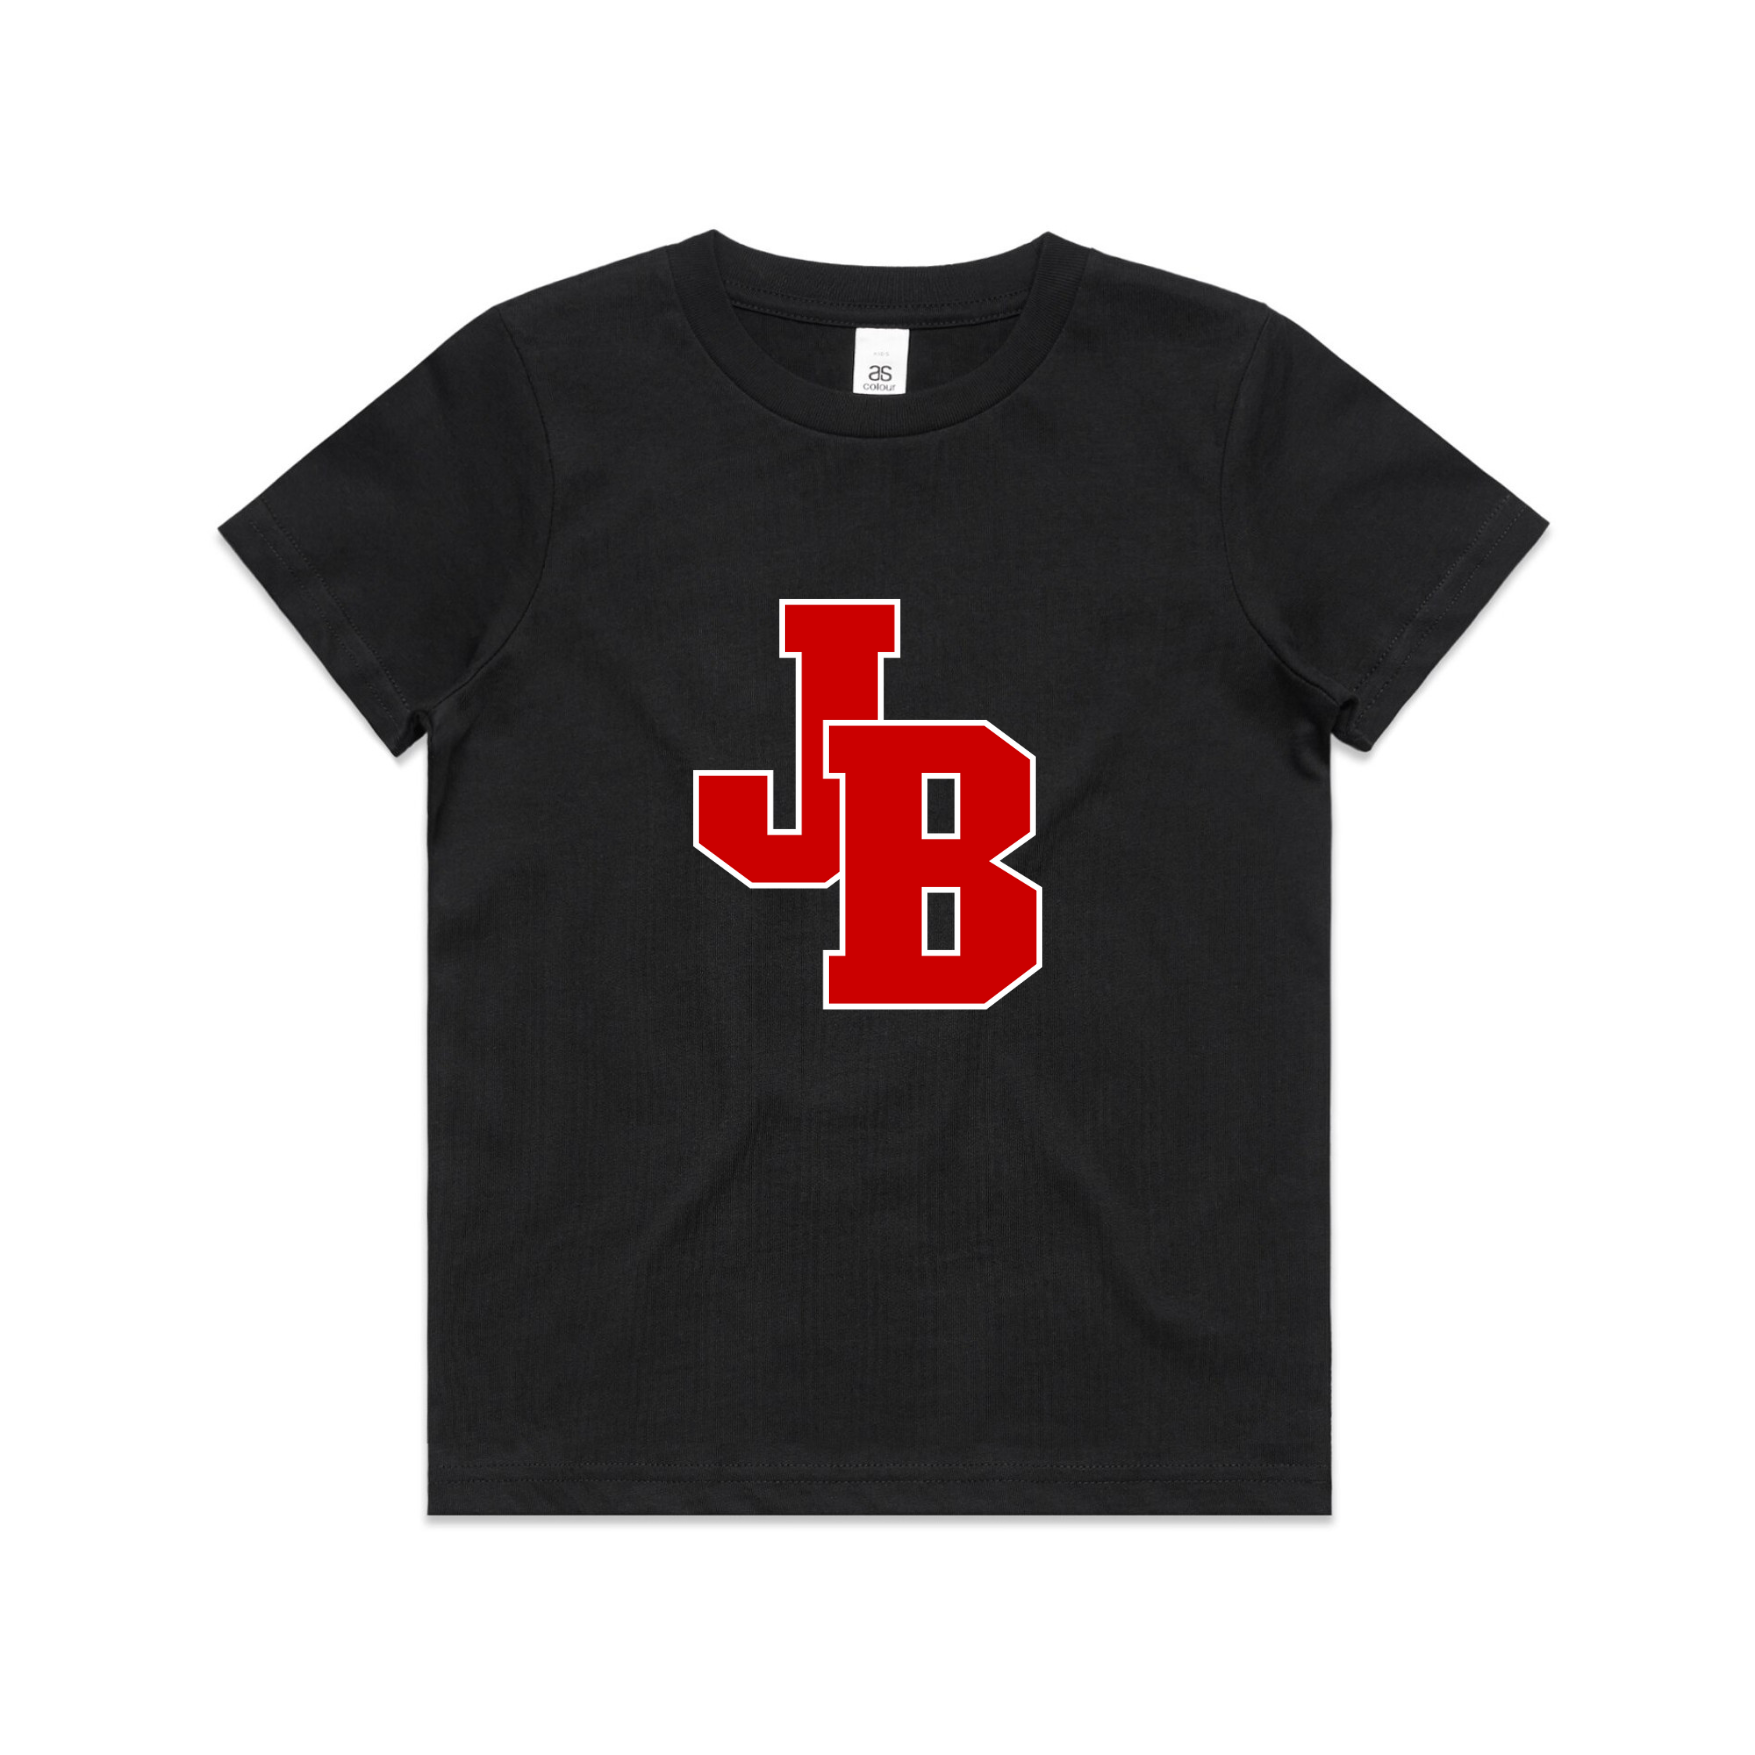 College JB | Current Tour Kids T shirt